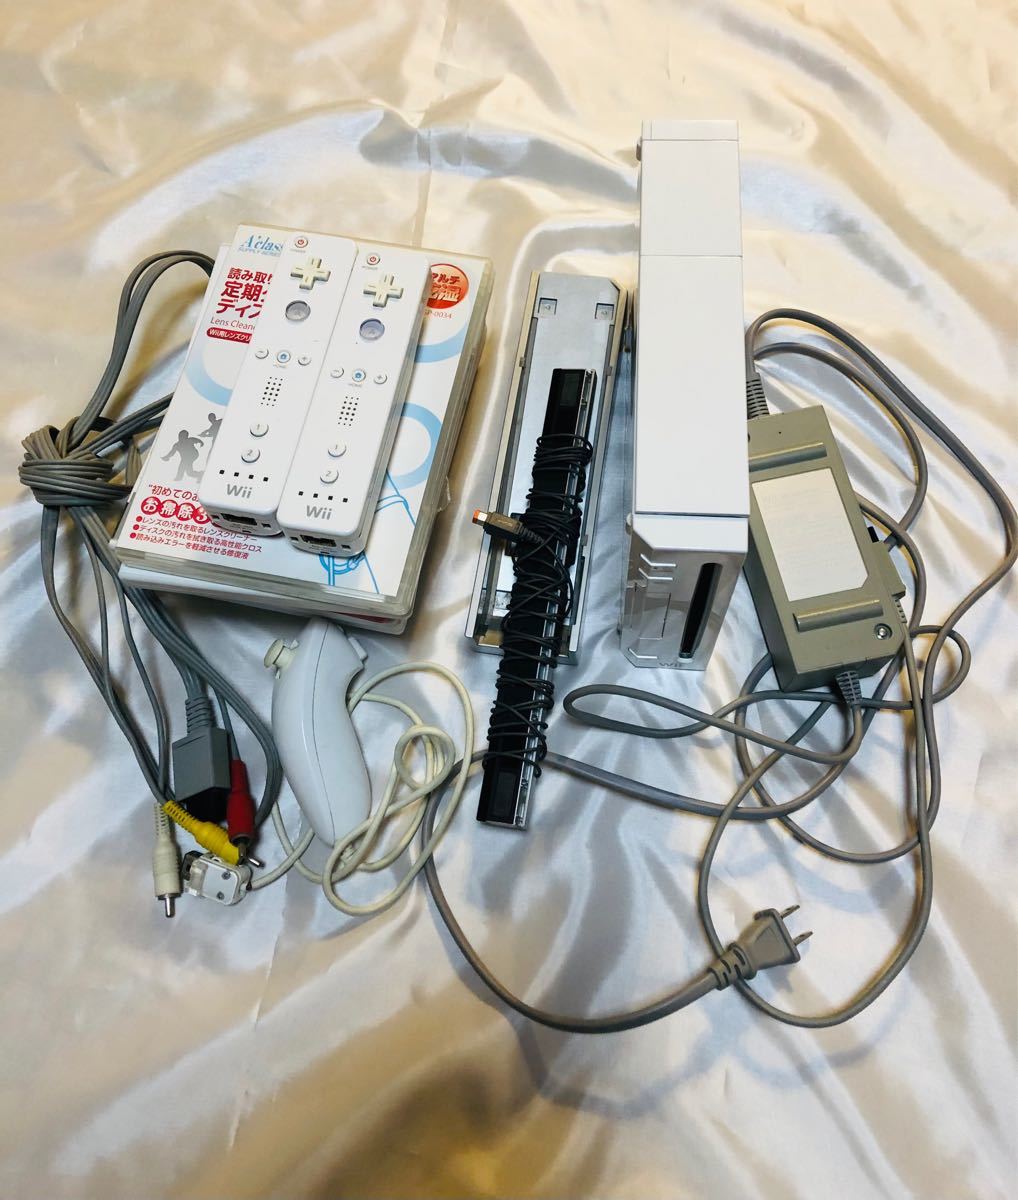 wii 豪華セット カセット7本 本体 リモコン  ヌンチャク オールセット 配線コード付き 中古品 家庭用ゲーム機 テレビゲーム